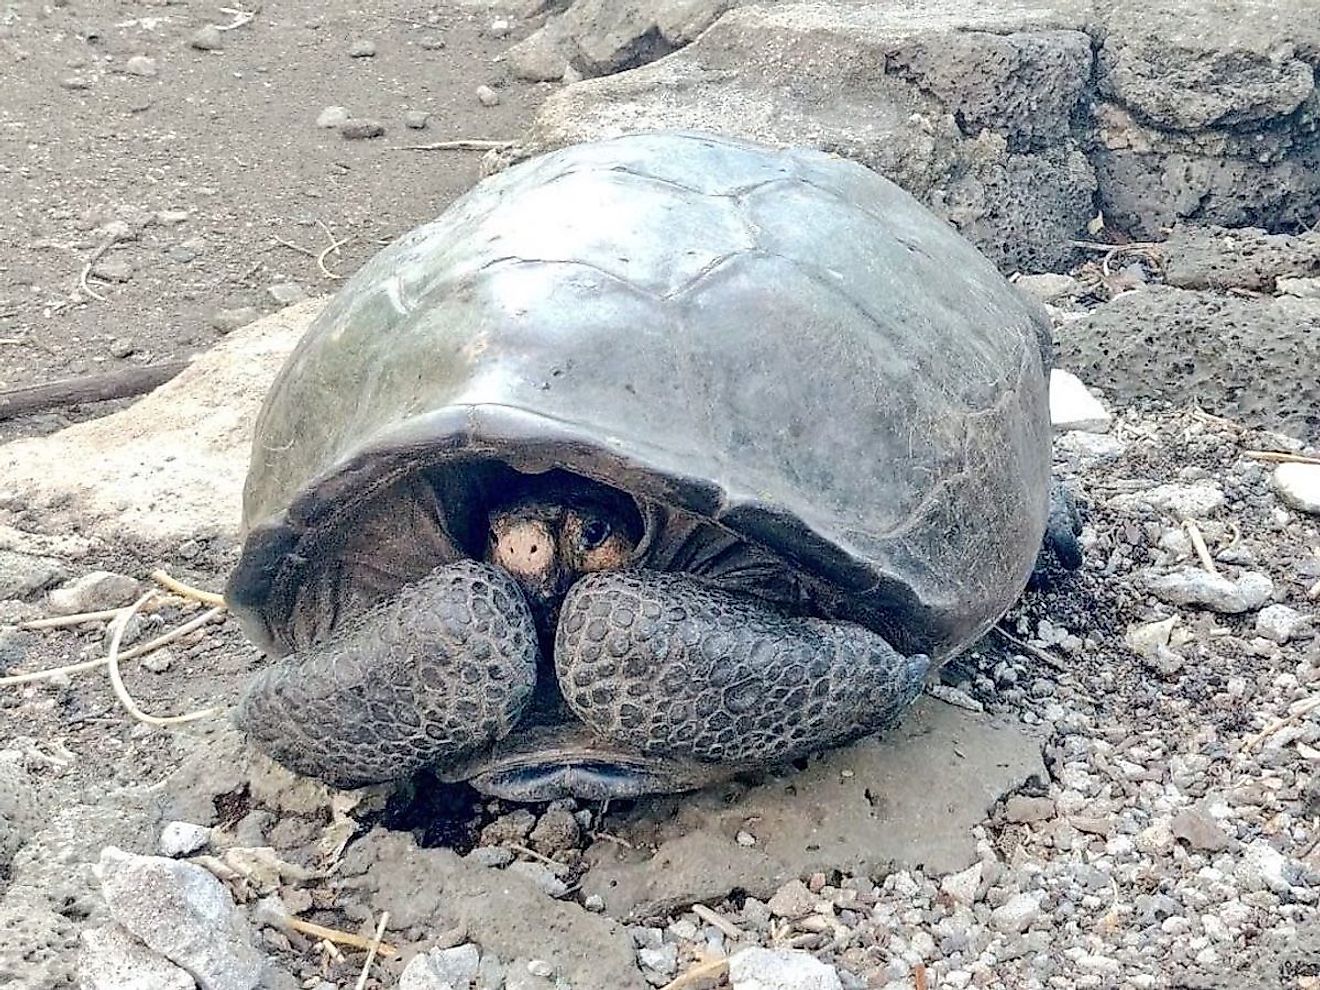 A Fernandina giant tortoise. Image credit: www.globalwildlife.org